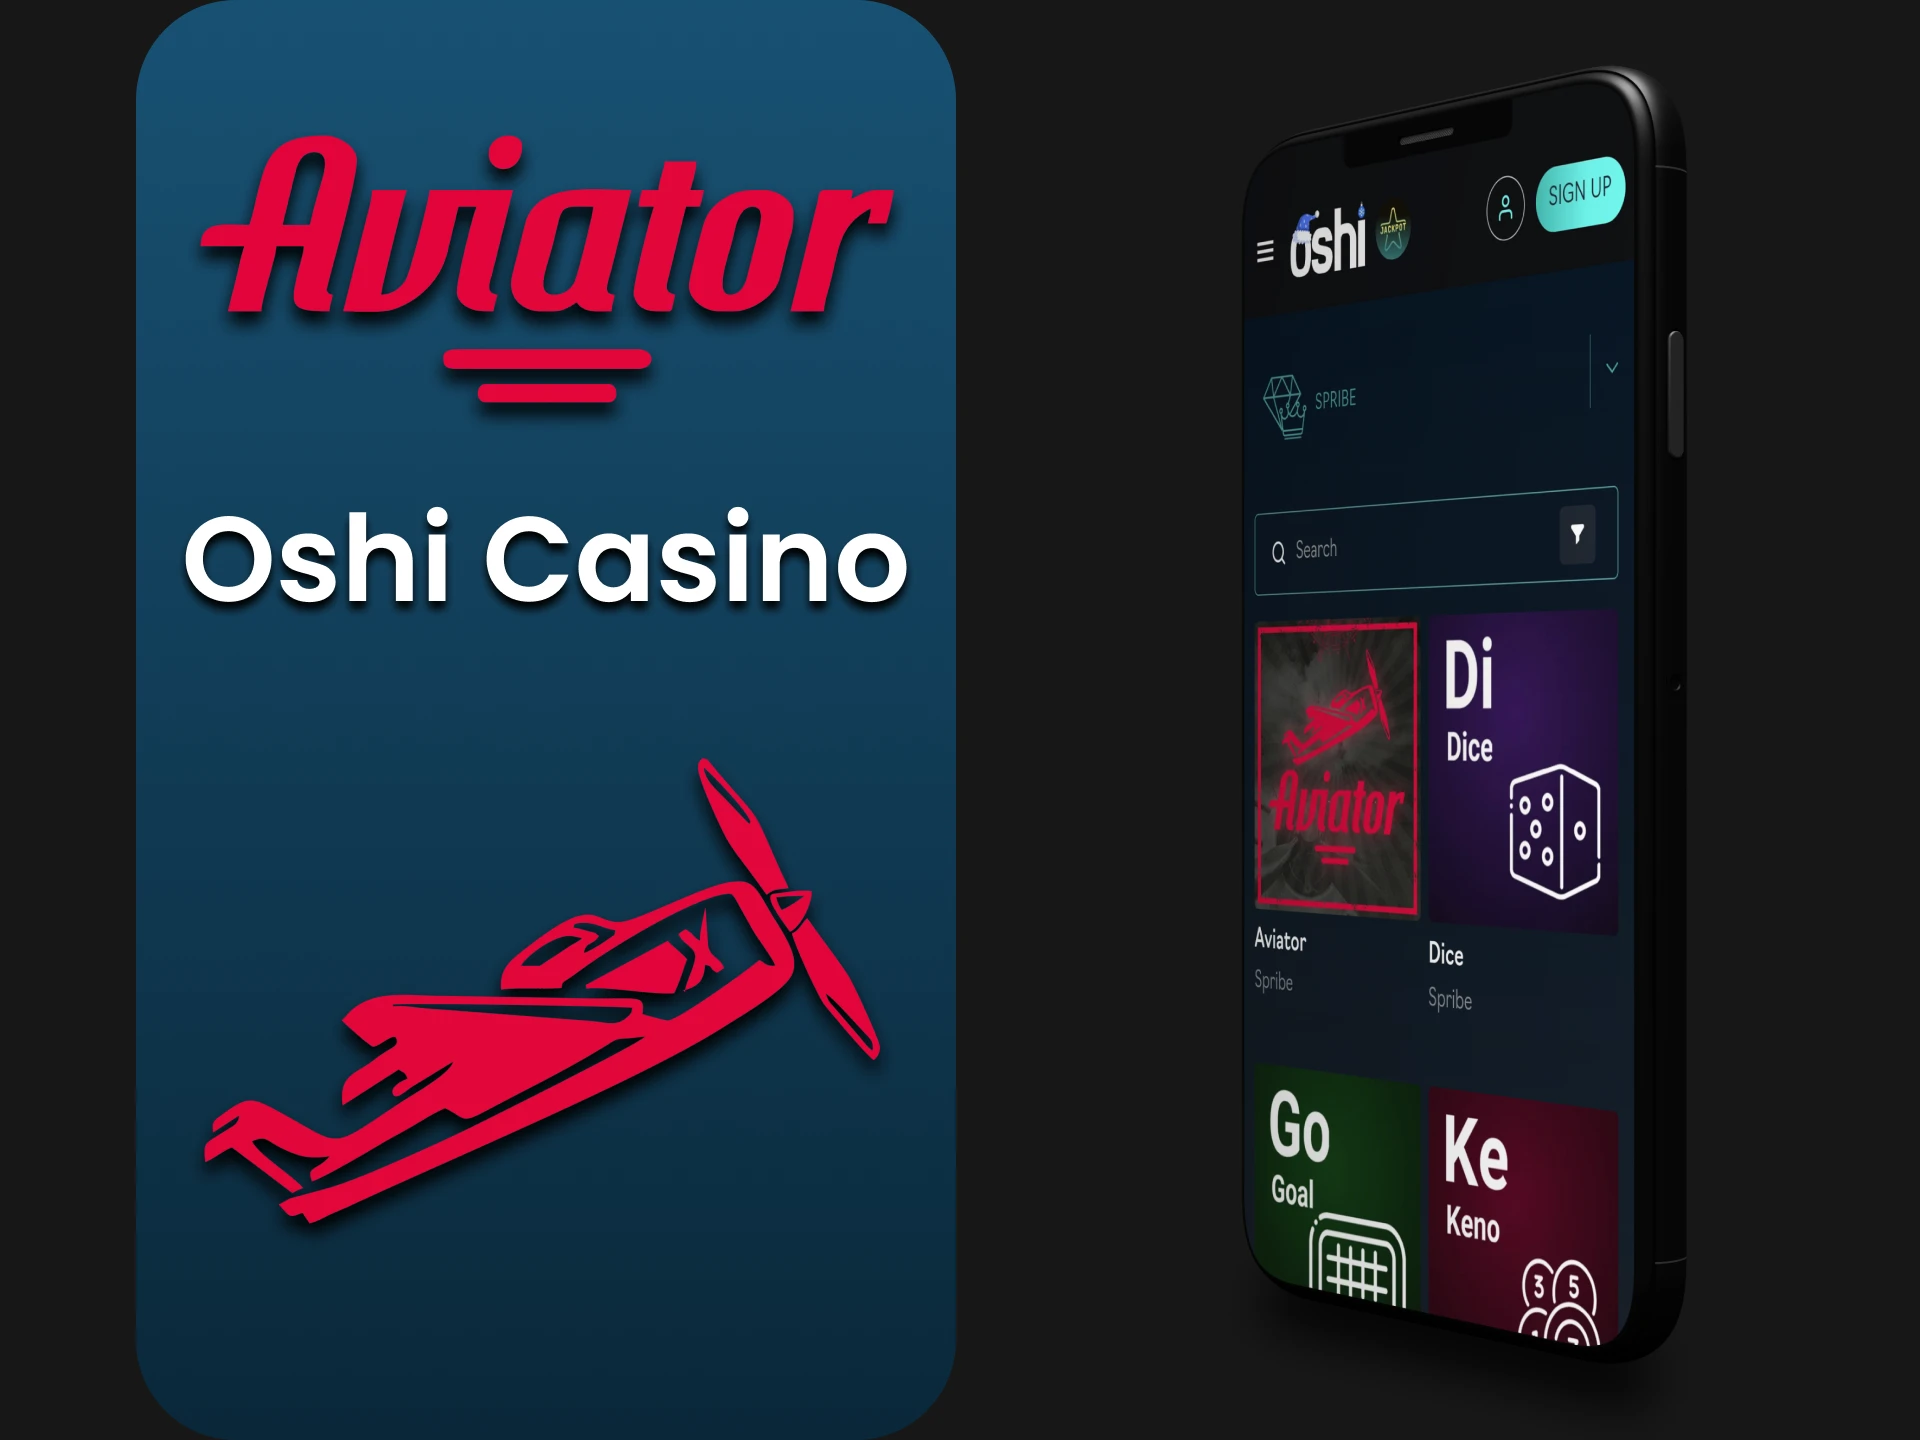 To play Aviator, choose the Oshi app.